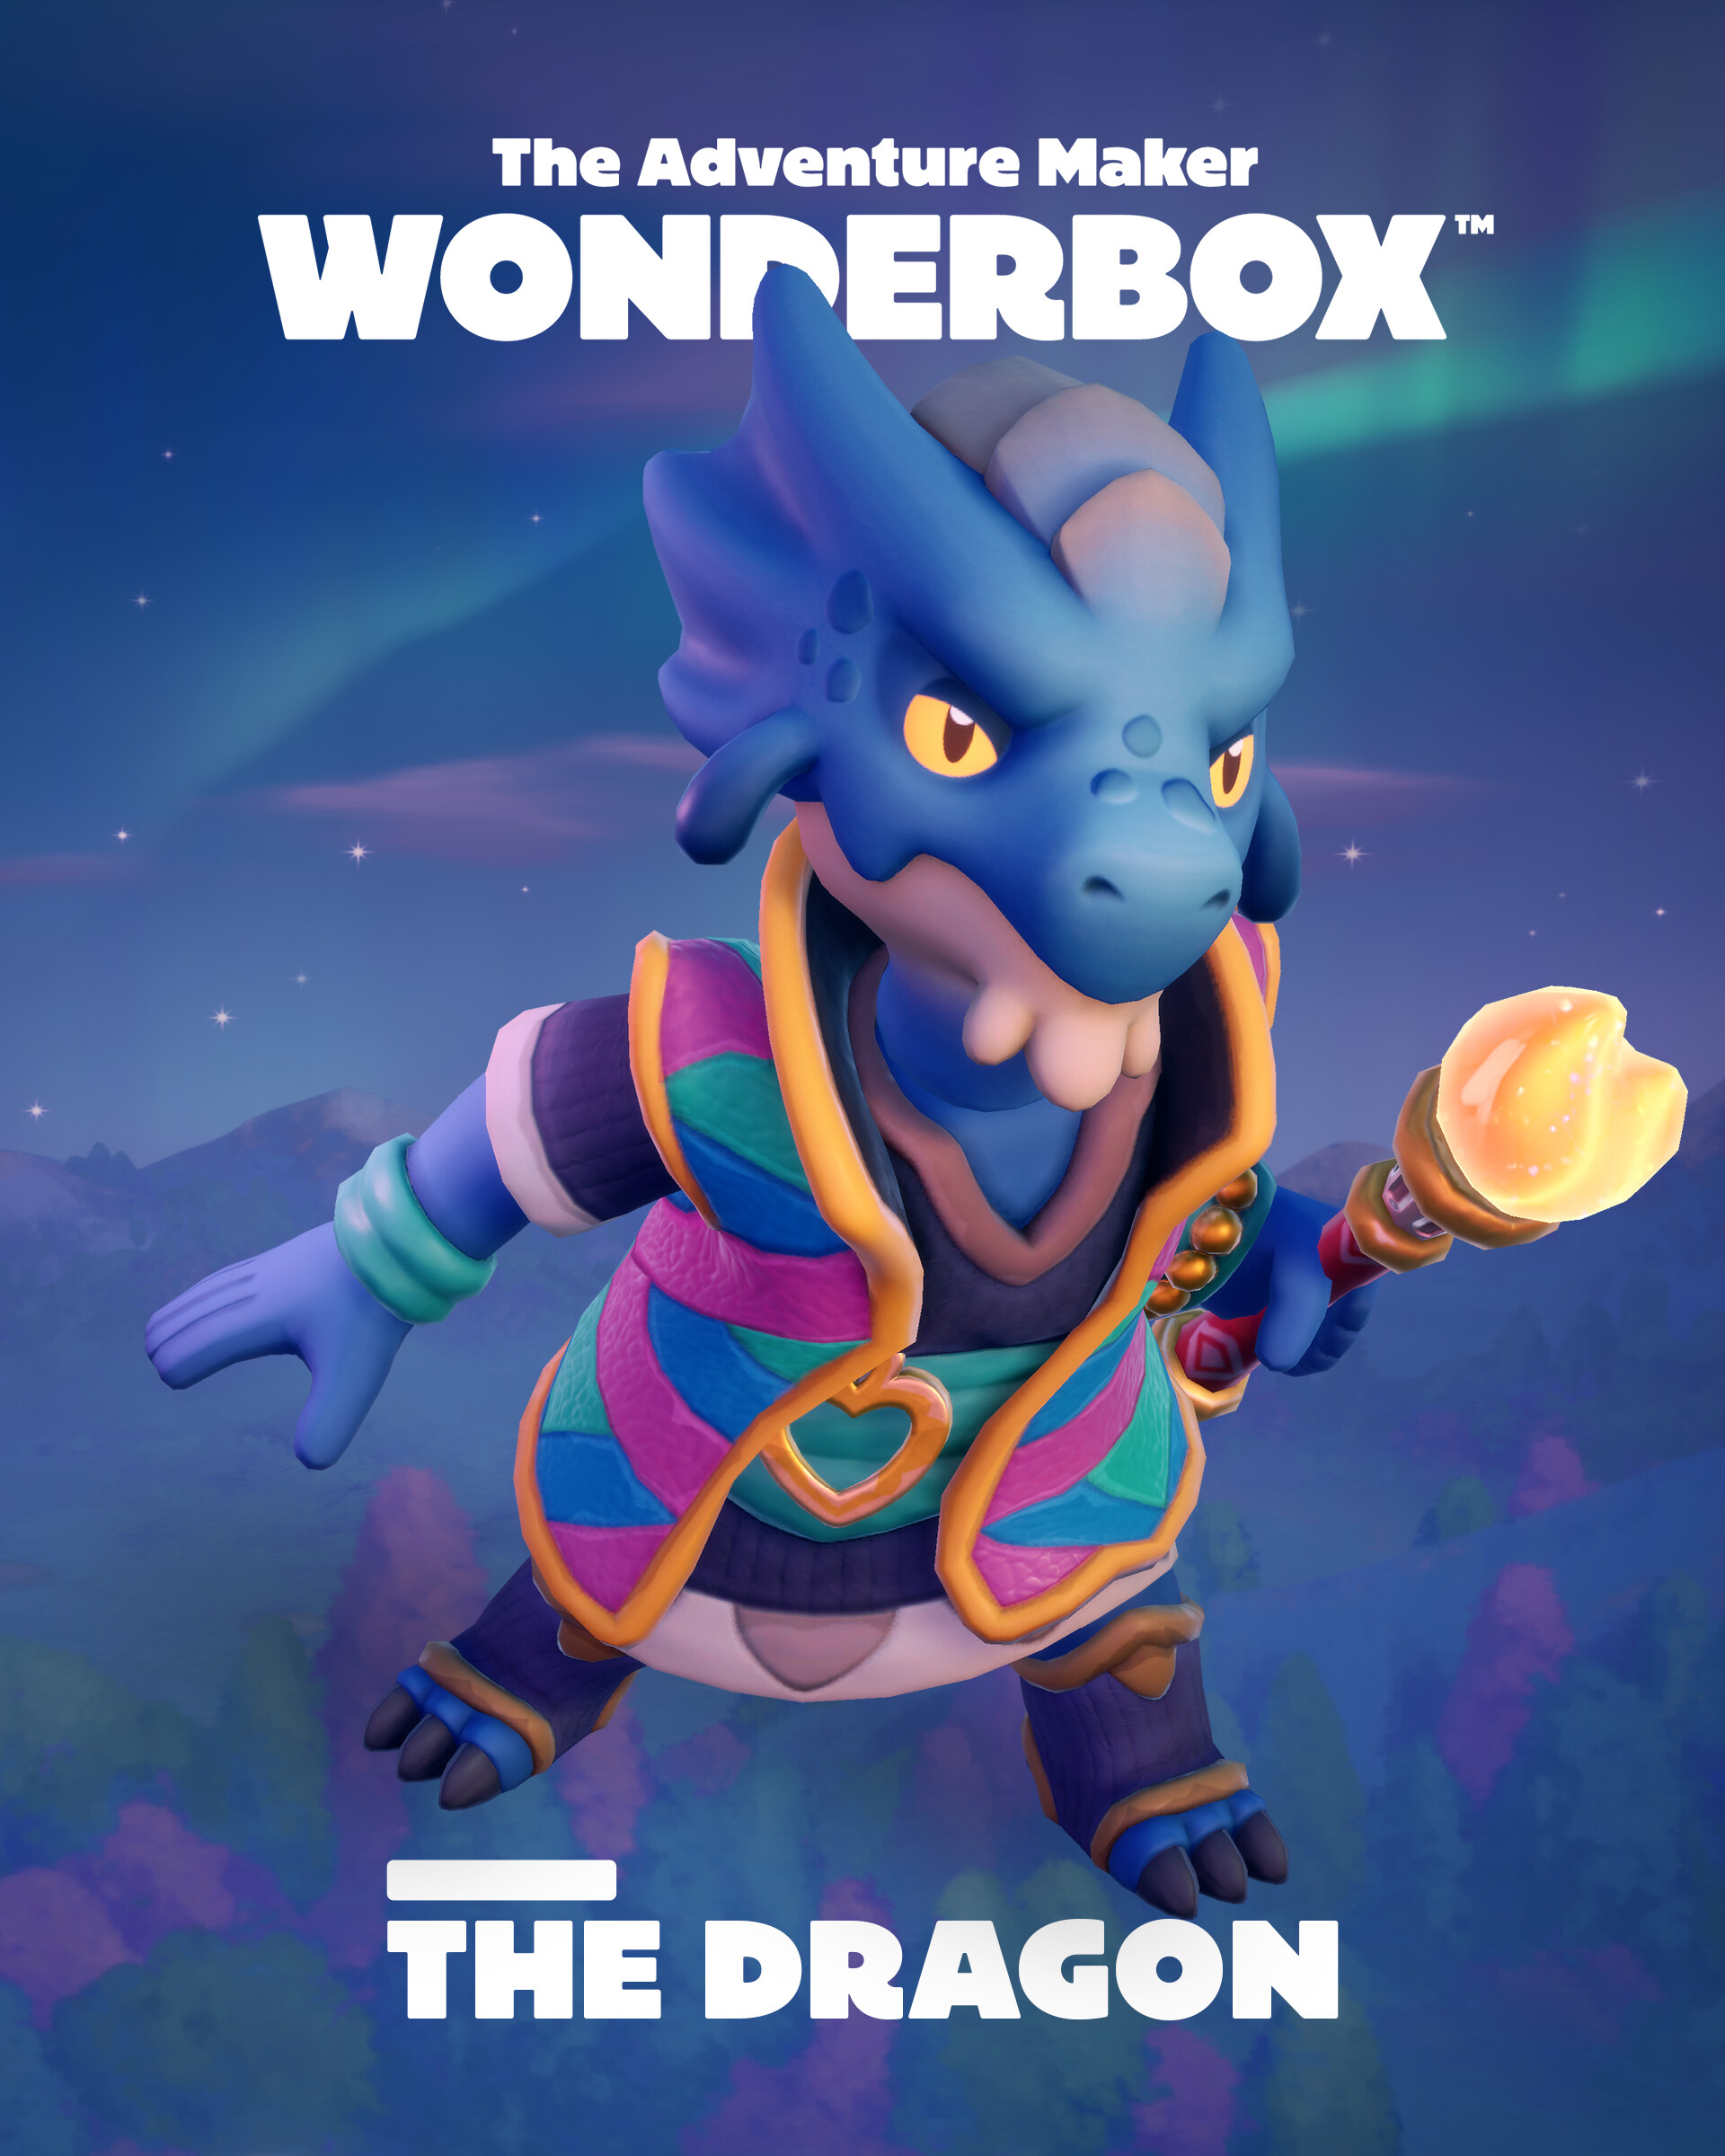 The Wonderbox - Wikipedia